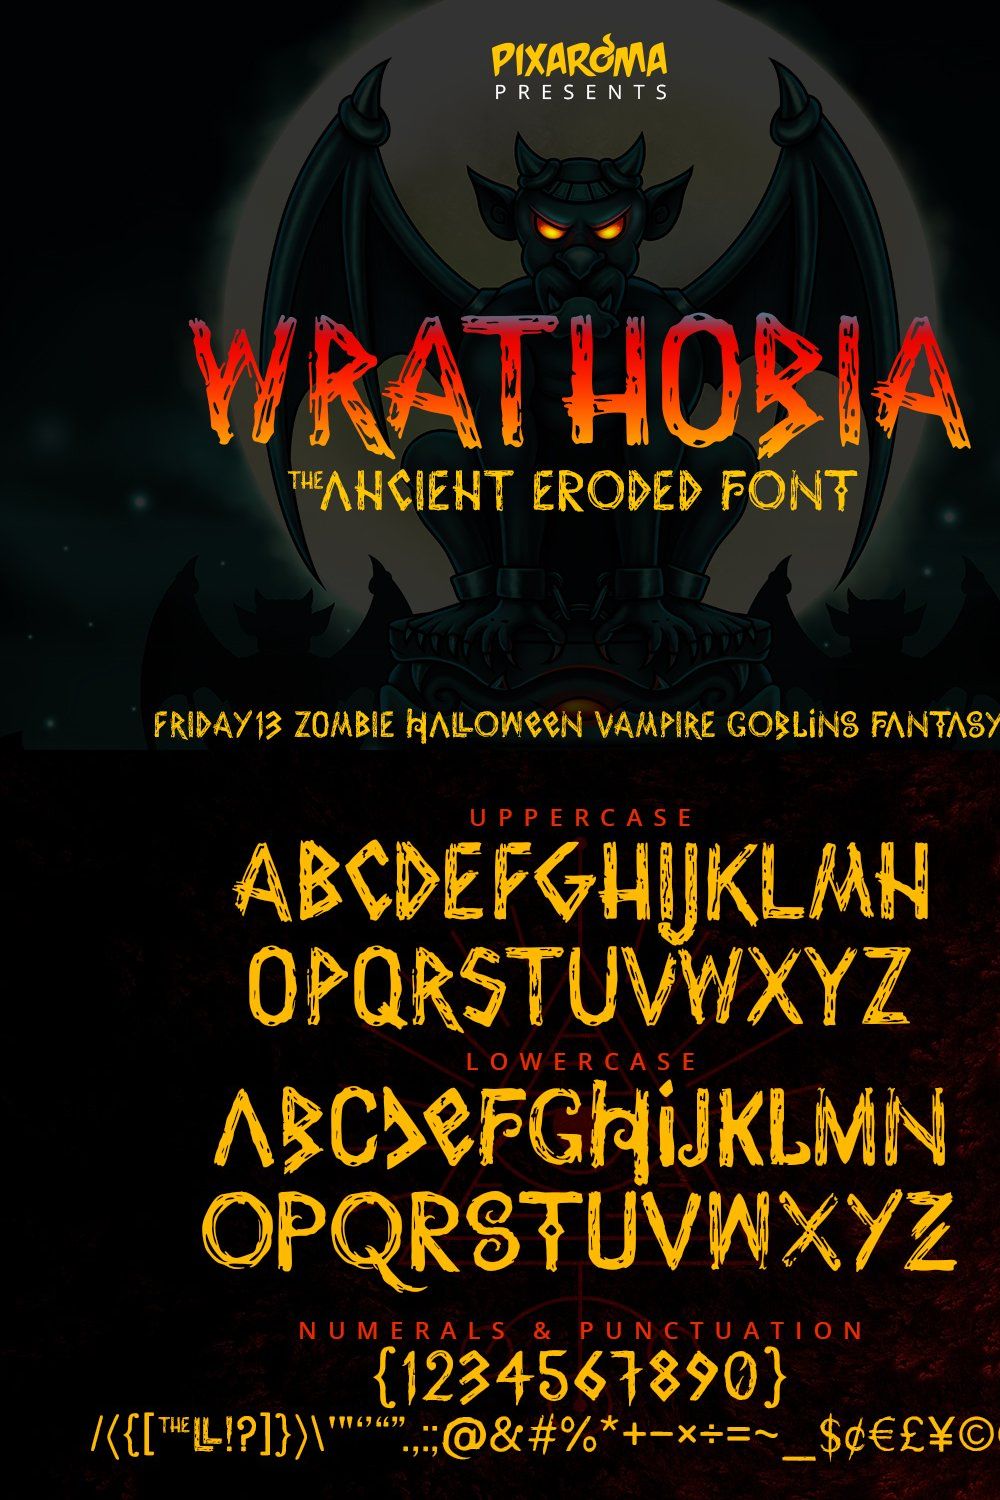 Wrathobia Display Font pinterest preview image.